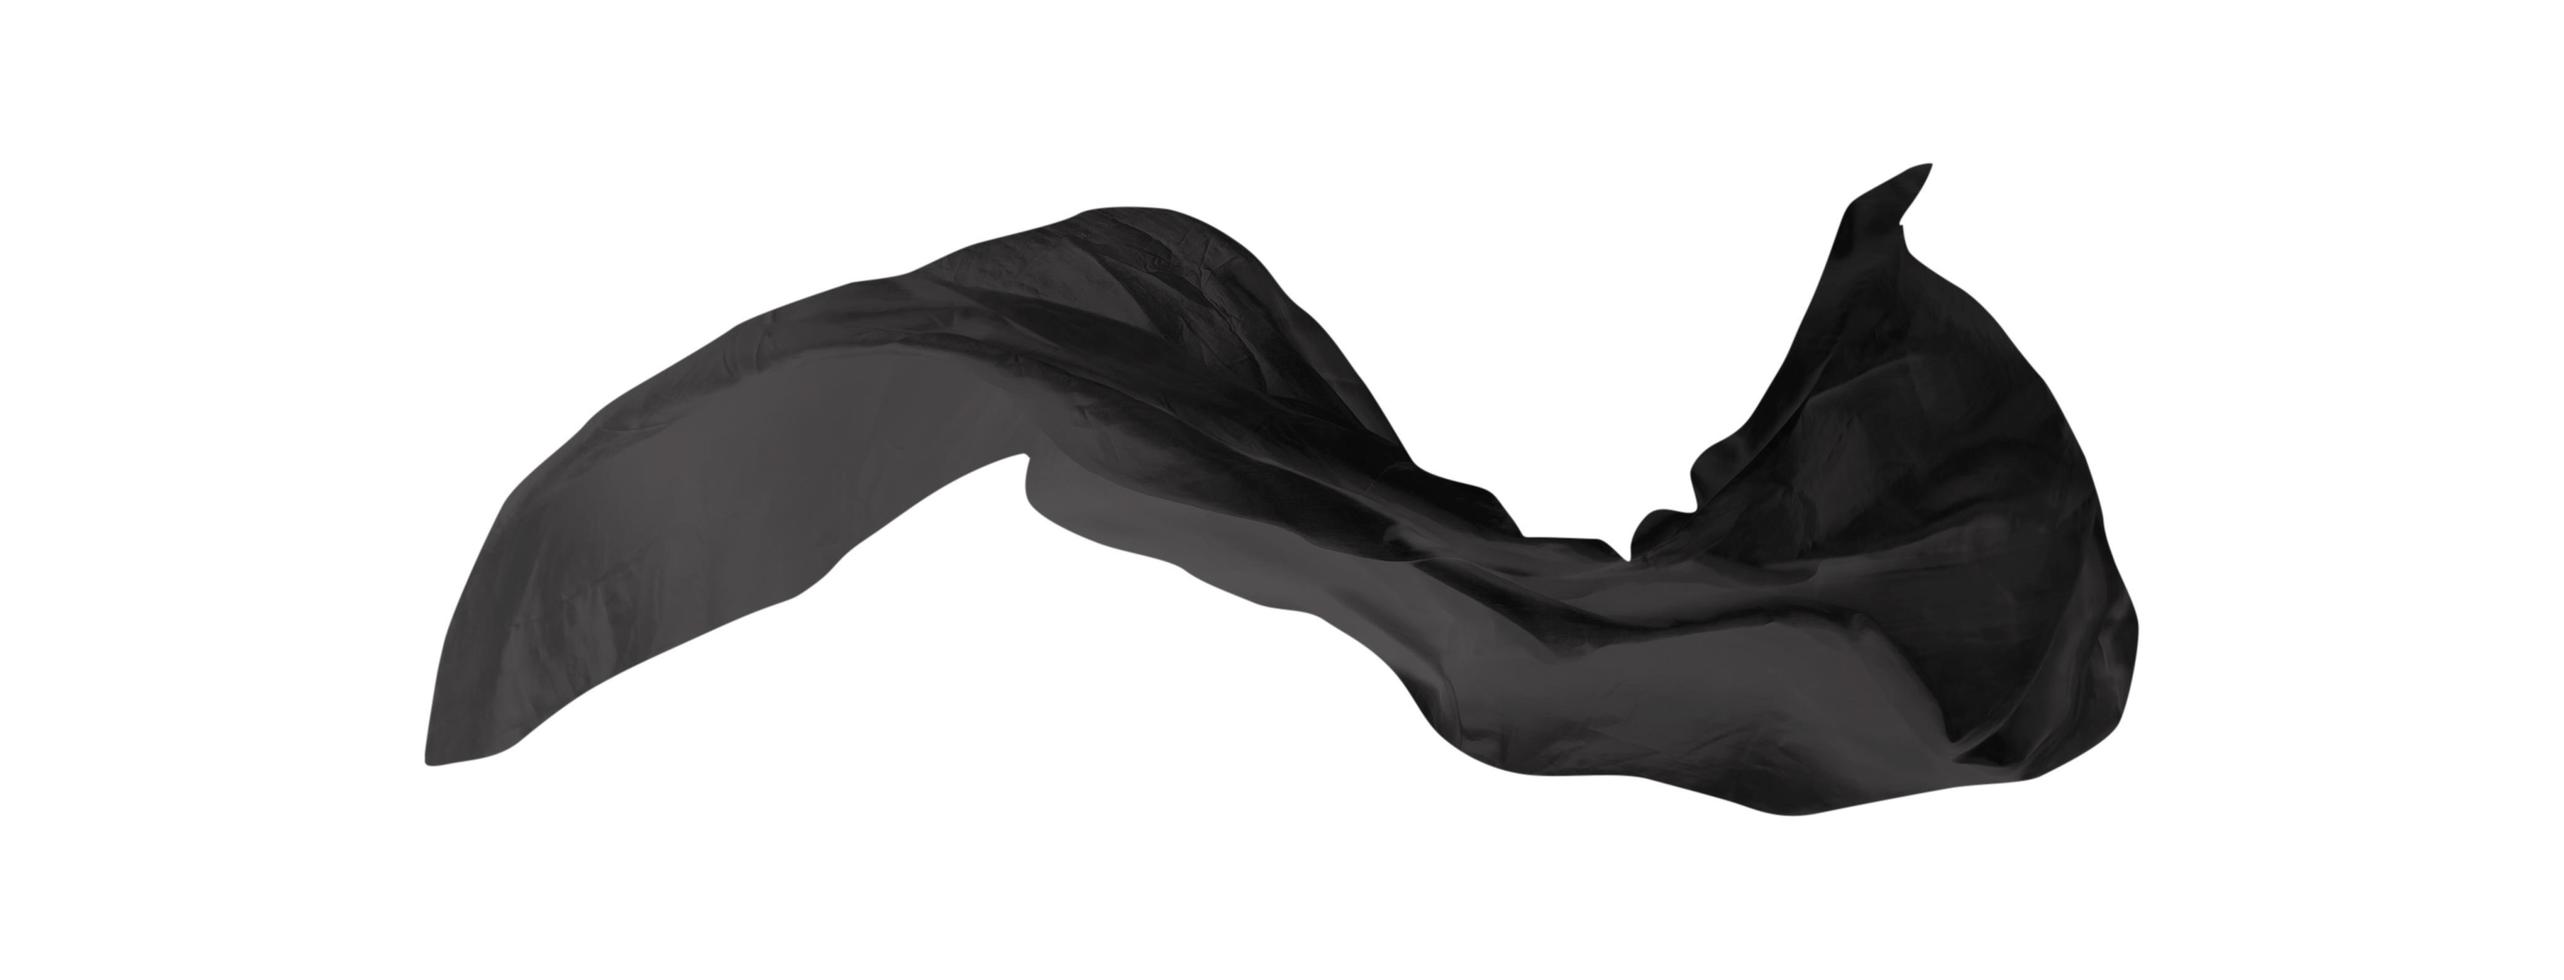 tessuto nero elegante liscio tessuto volante trama di seta astratto su bianco foto